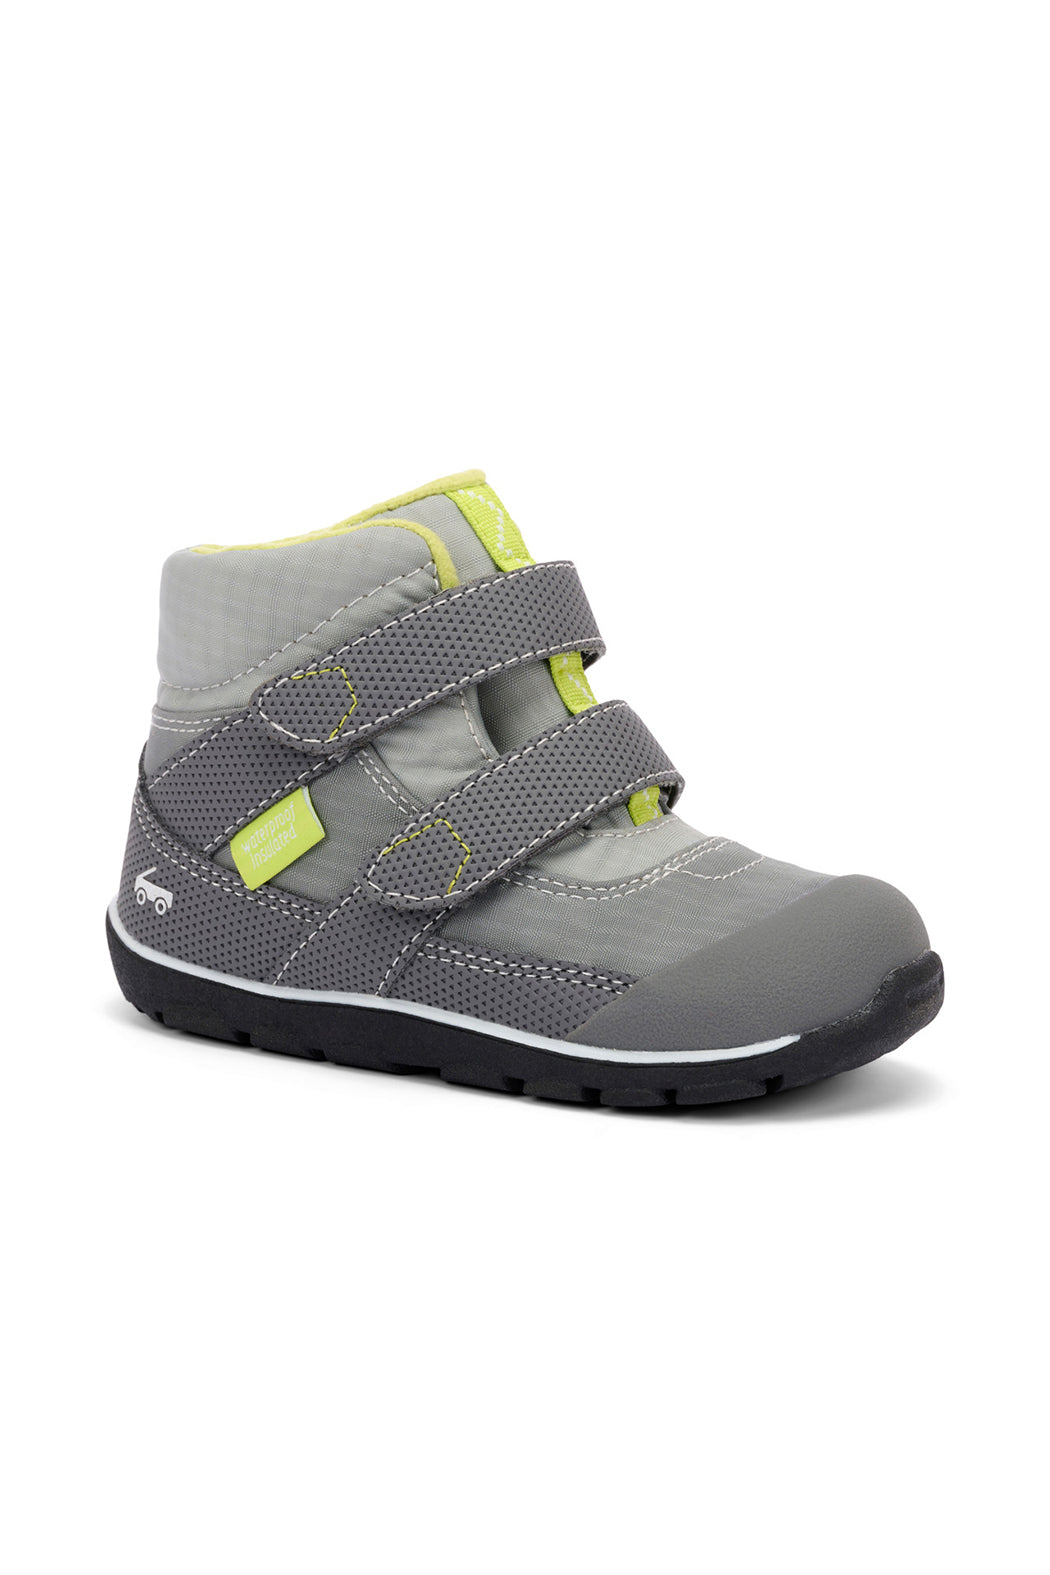 See Kai Run Atlas Waterproof/Insulated Boots - Grey/Lime